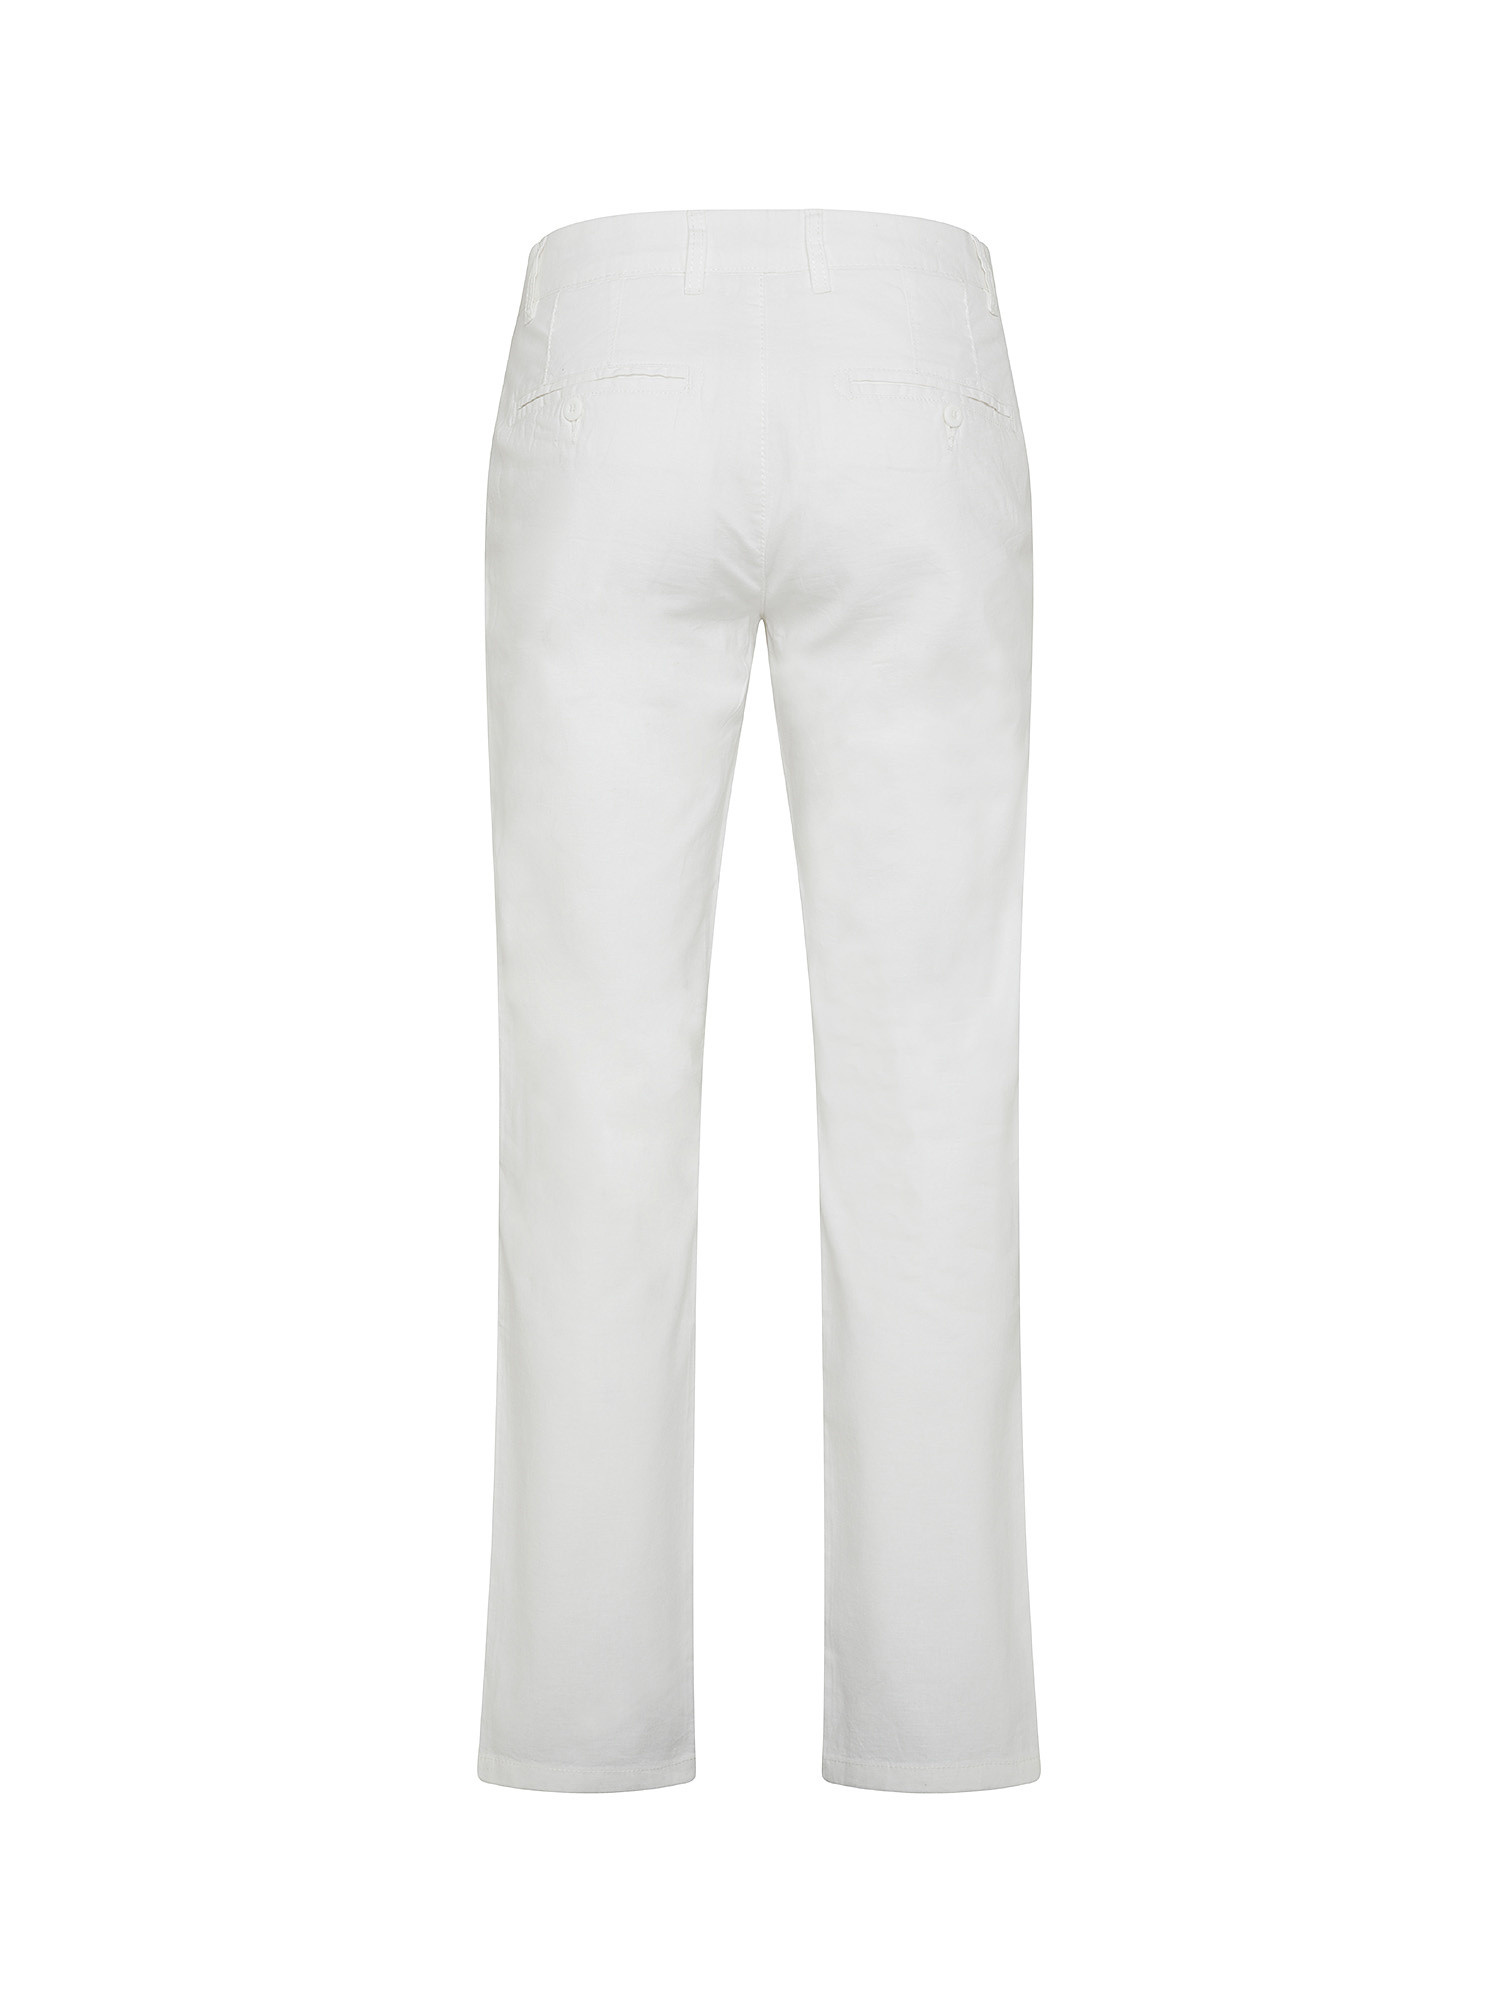 JCT - Pantaloni chino in misto lino, Bianco, large image number 1